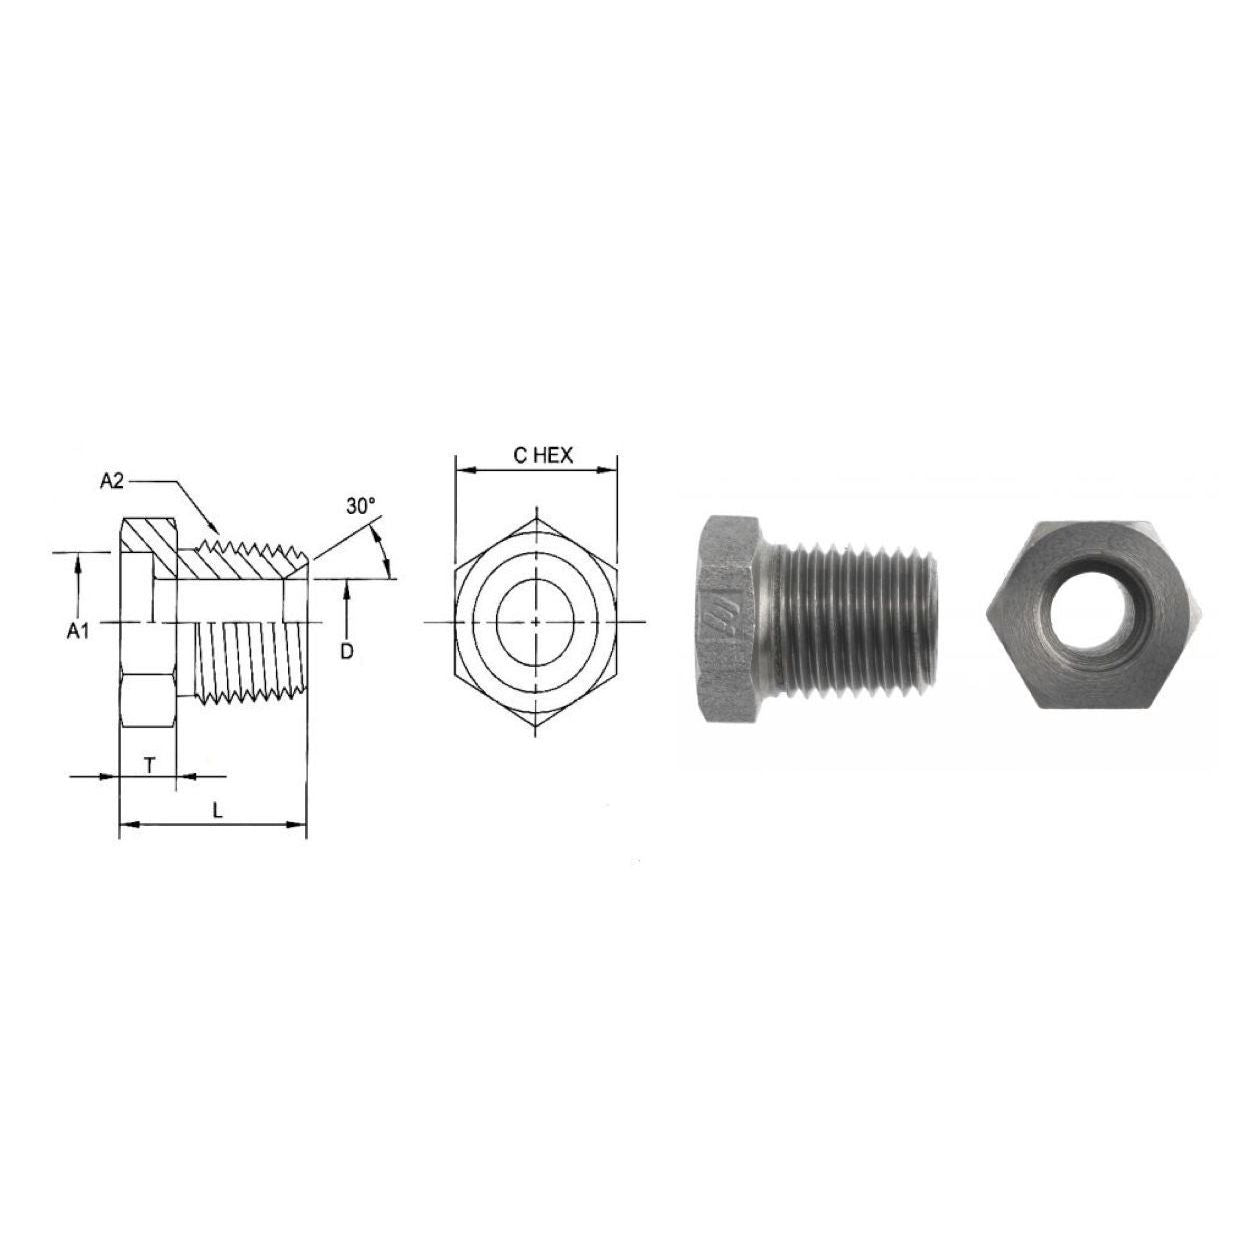 0404-08-08 : OneHydraulics 0.5 (1/2) Bore x 0.5 (1/2) Male NPT Straight Plug, Steel